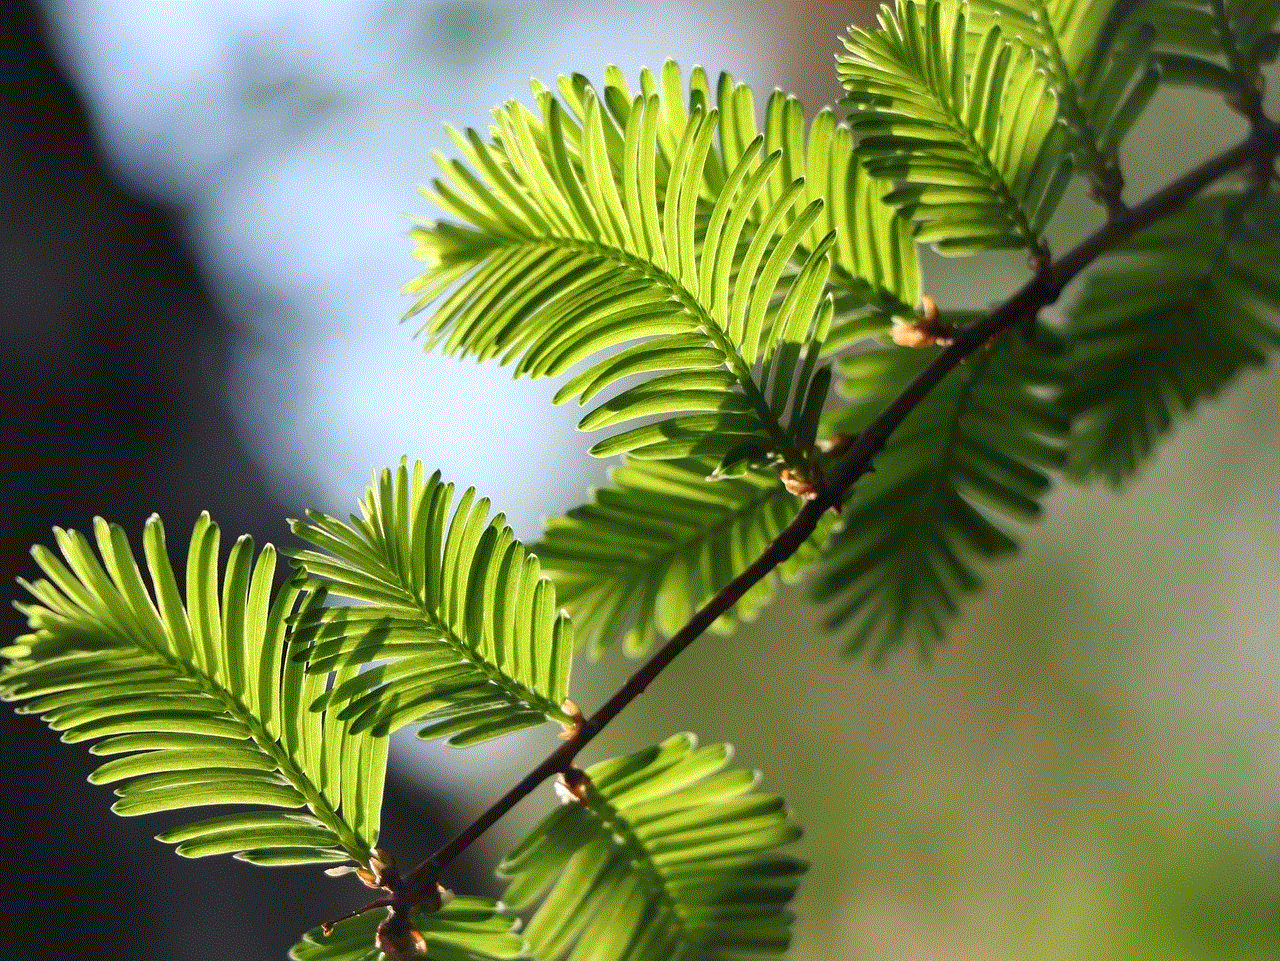 Pine Leaf